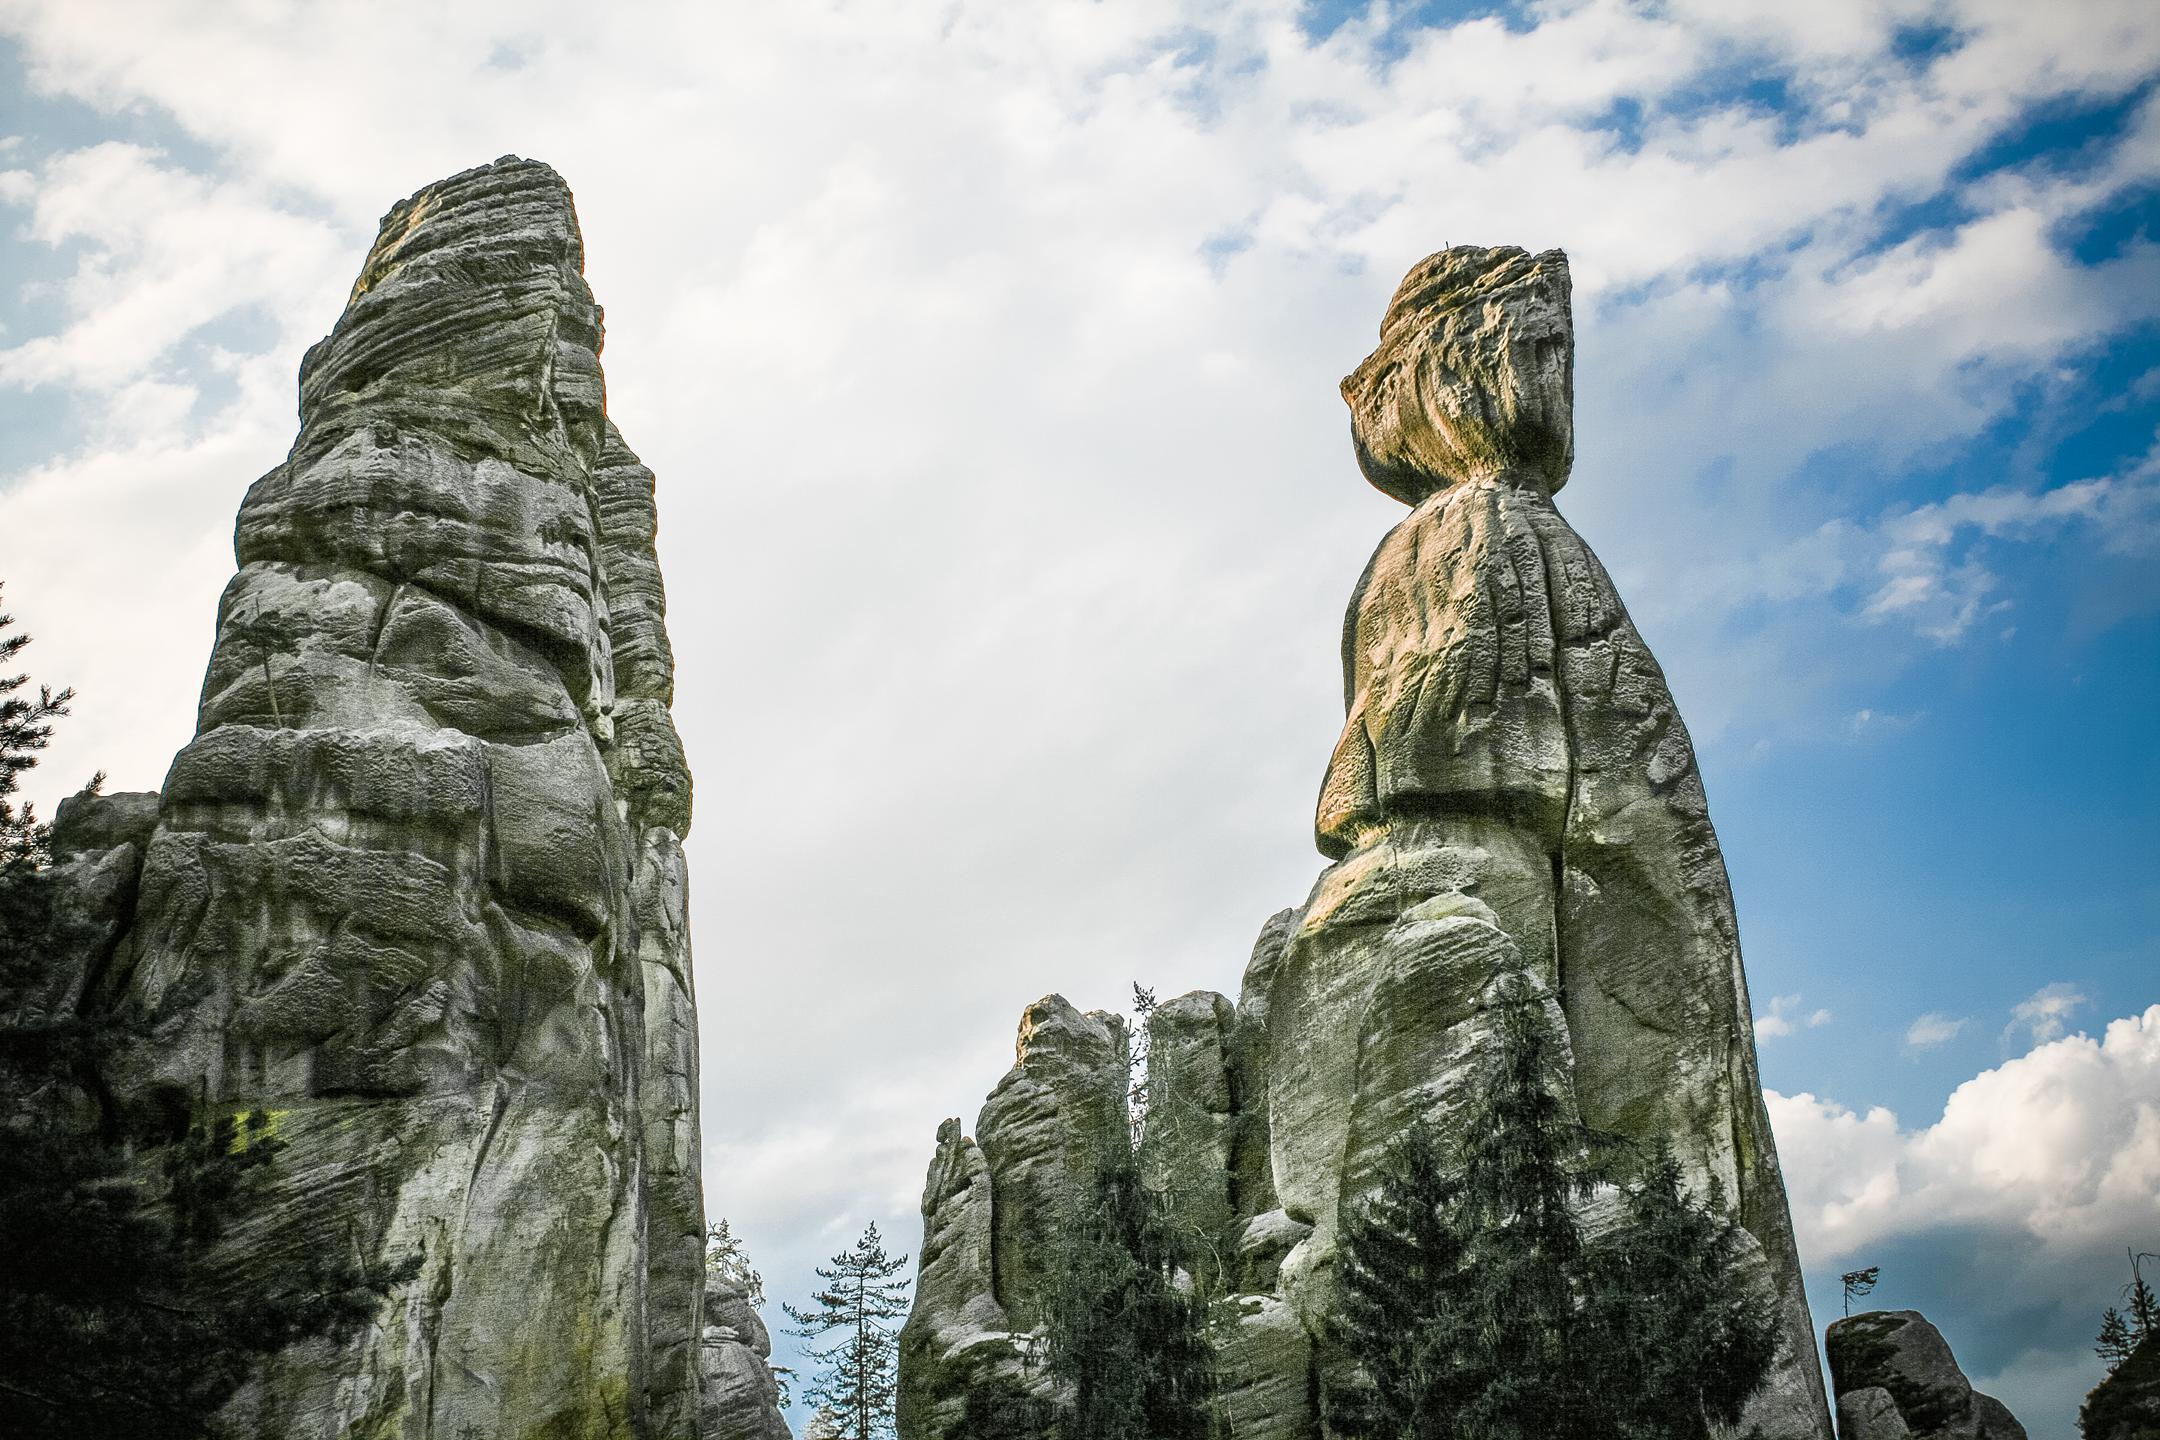 The city of rocks in the Czech Republic